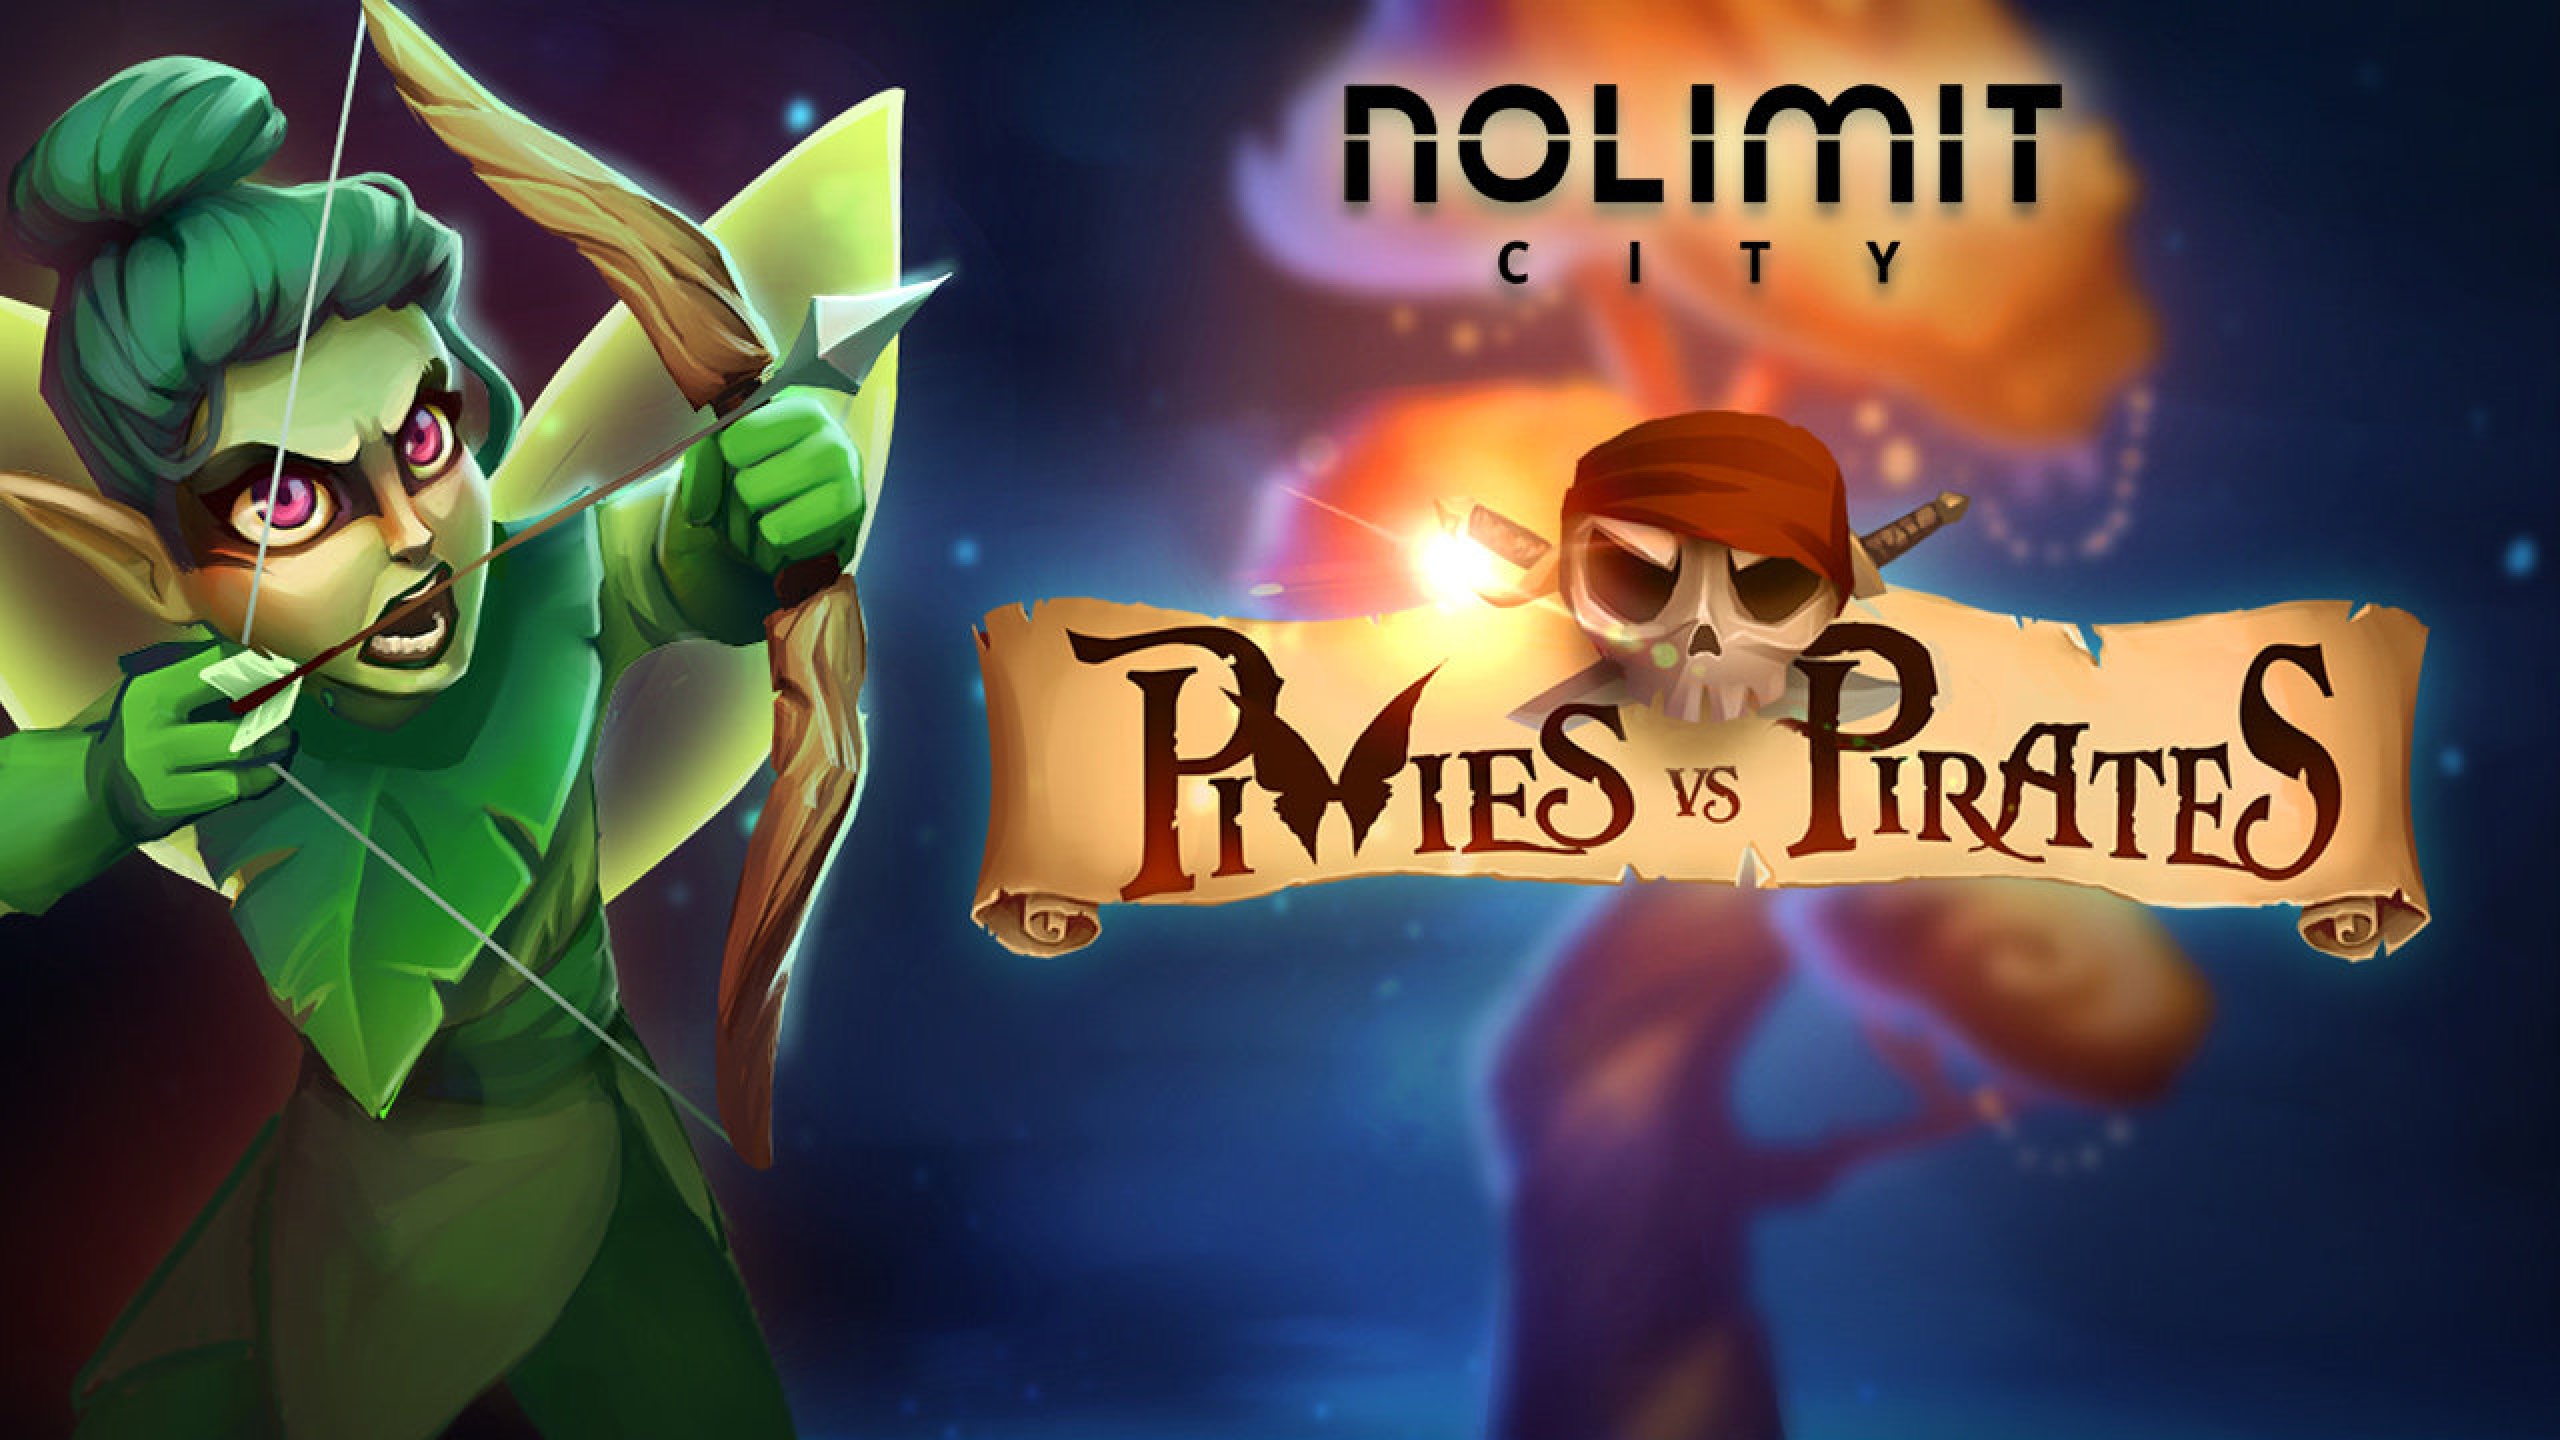 The Pixies Vs Pirates Online Slot Demo Game by Nolimit City